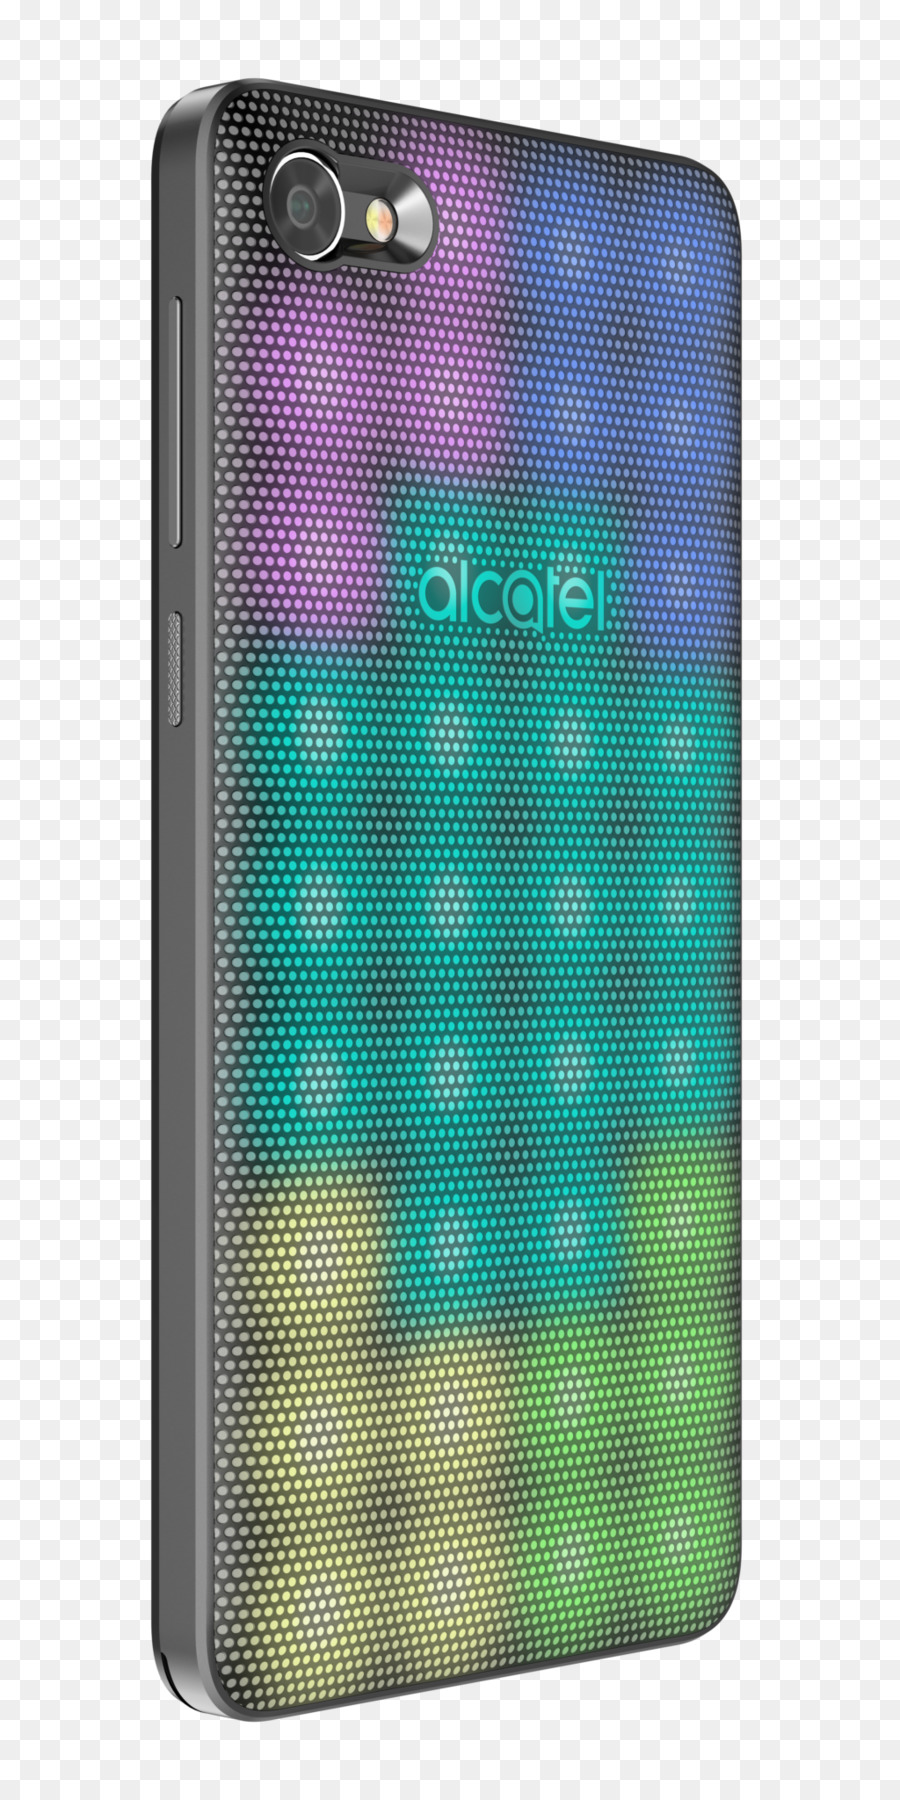 Alcatel Mobile Smartphone Light emitting diode Mobile World Congress hat Alcatel Idol 4 - Smartphone